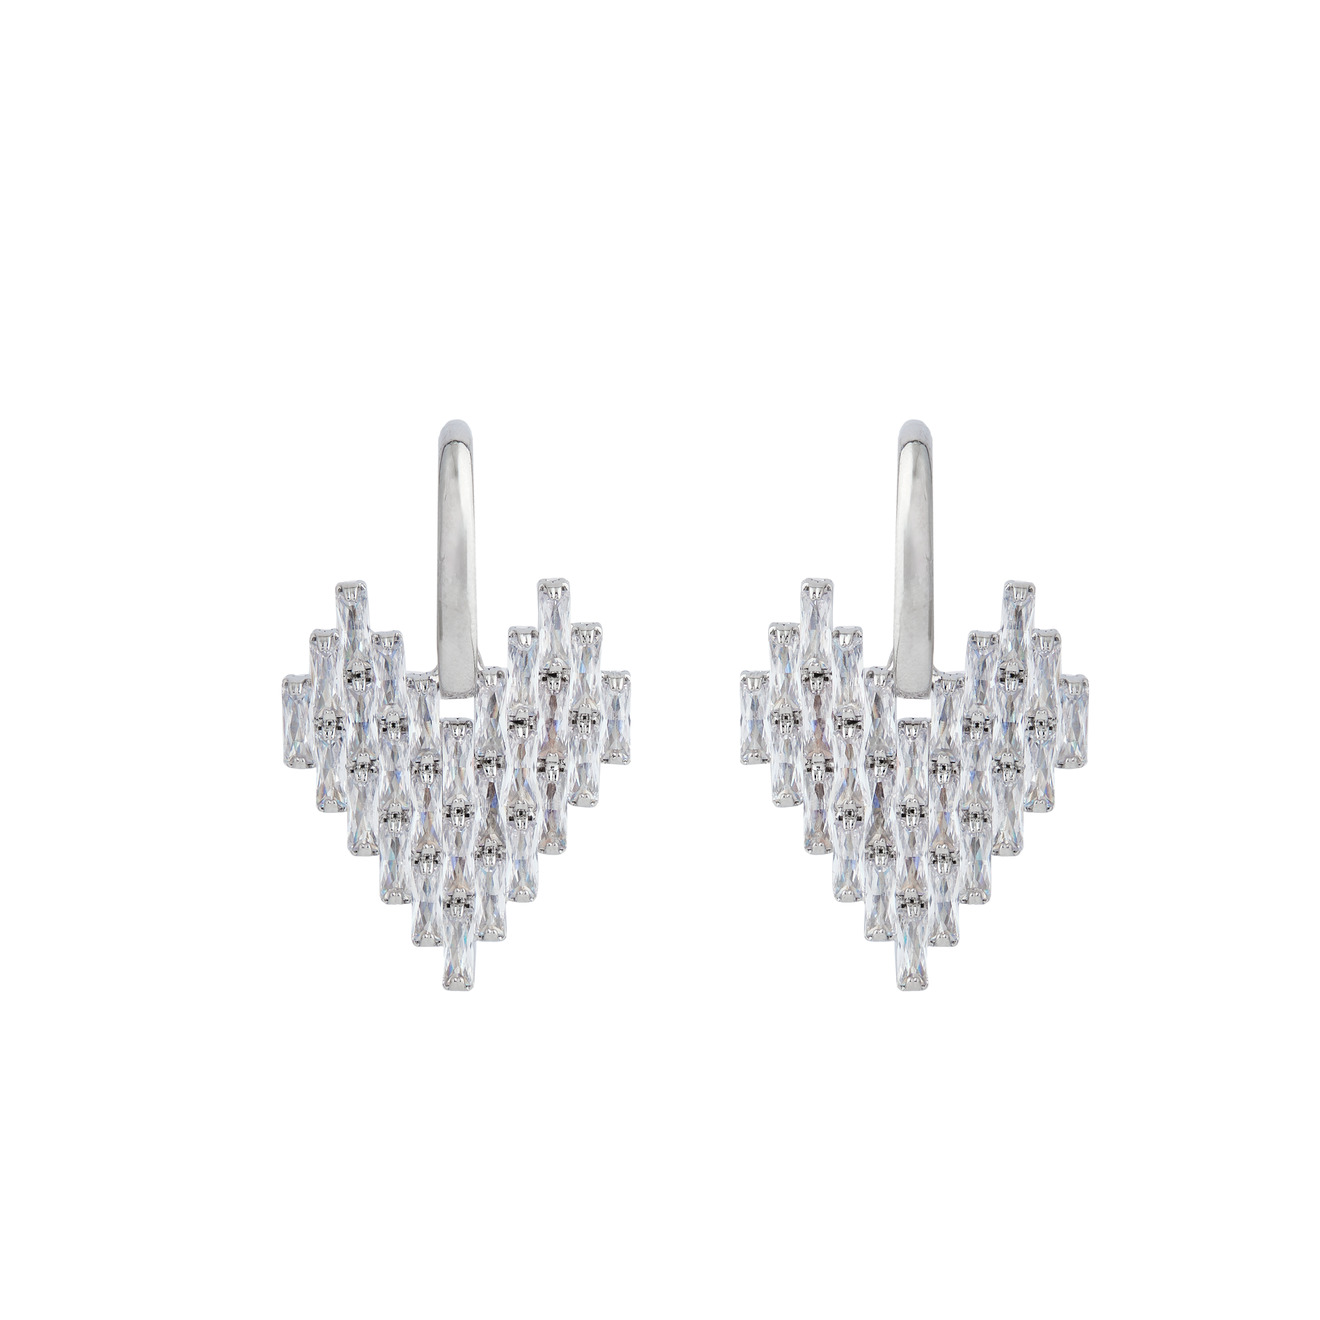 Herald Percy Серебристые серьги-сердца с багетами кристаллов herald percy серебристые серьги сердца с подвесками из кристаллов